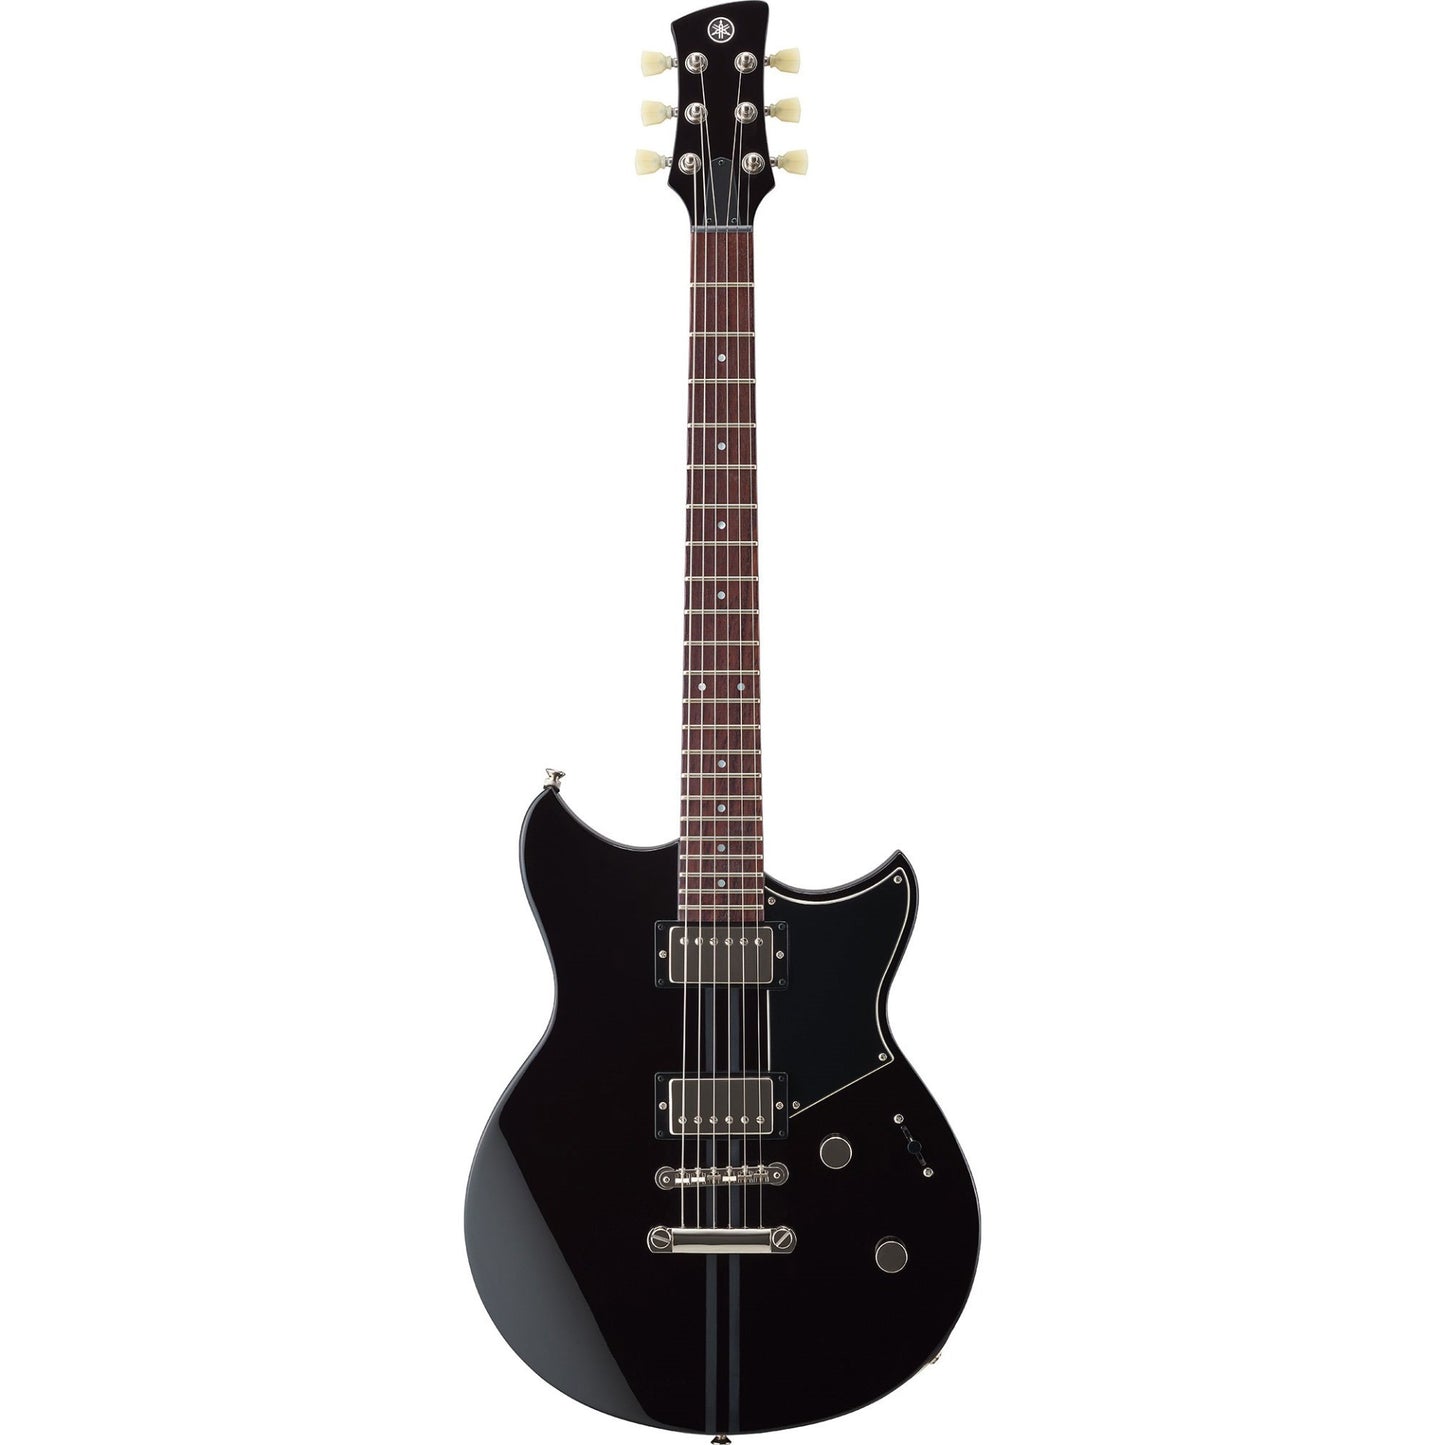 Yamaha Revstar RSE20BL Electric Guitar in Black Guitar Only